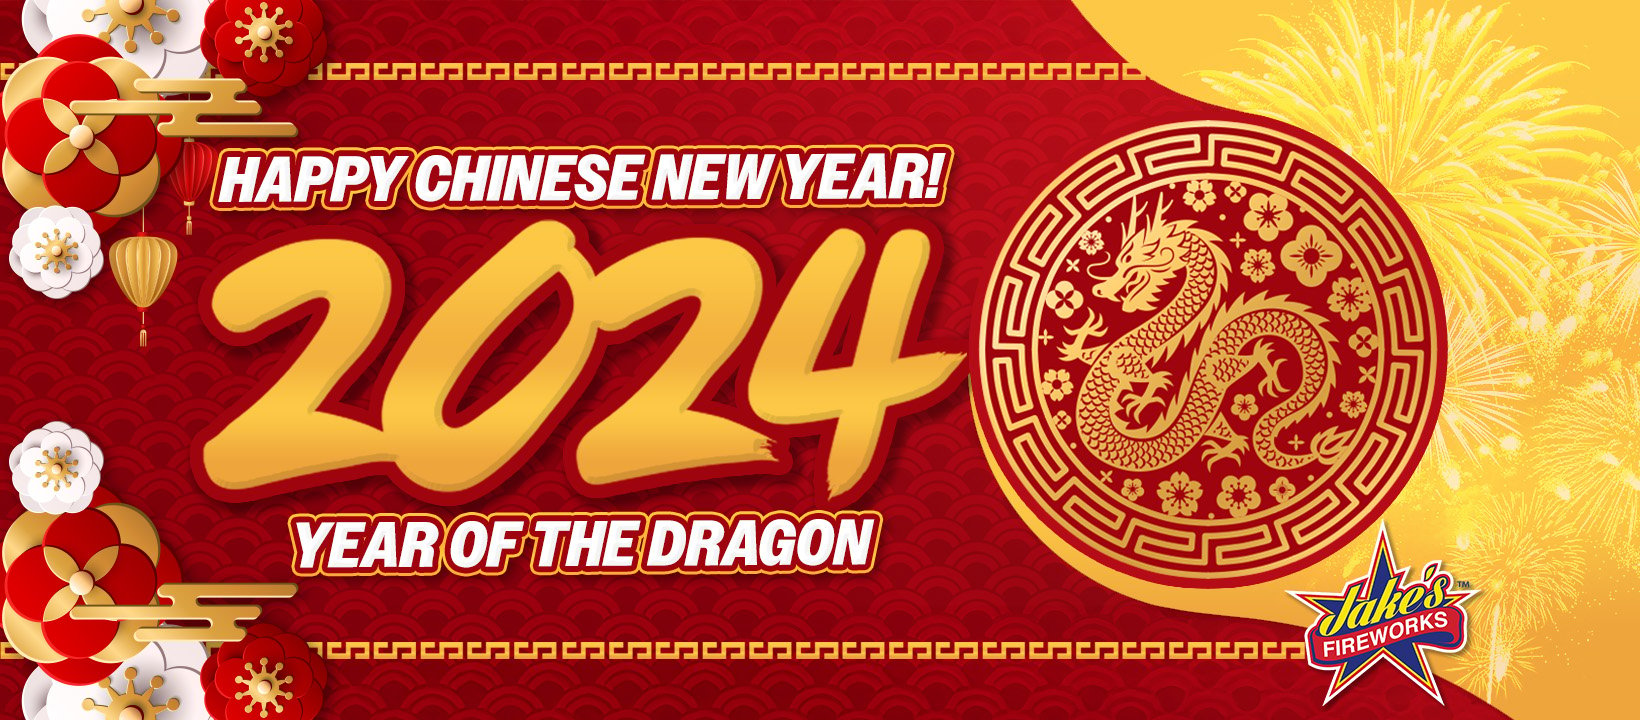 FREE Premium 6 Shot Artillery Celebrating Chinese New Year